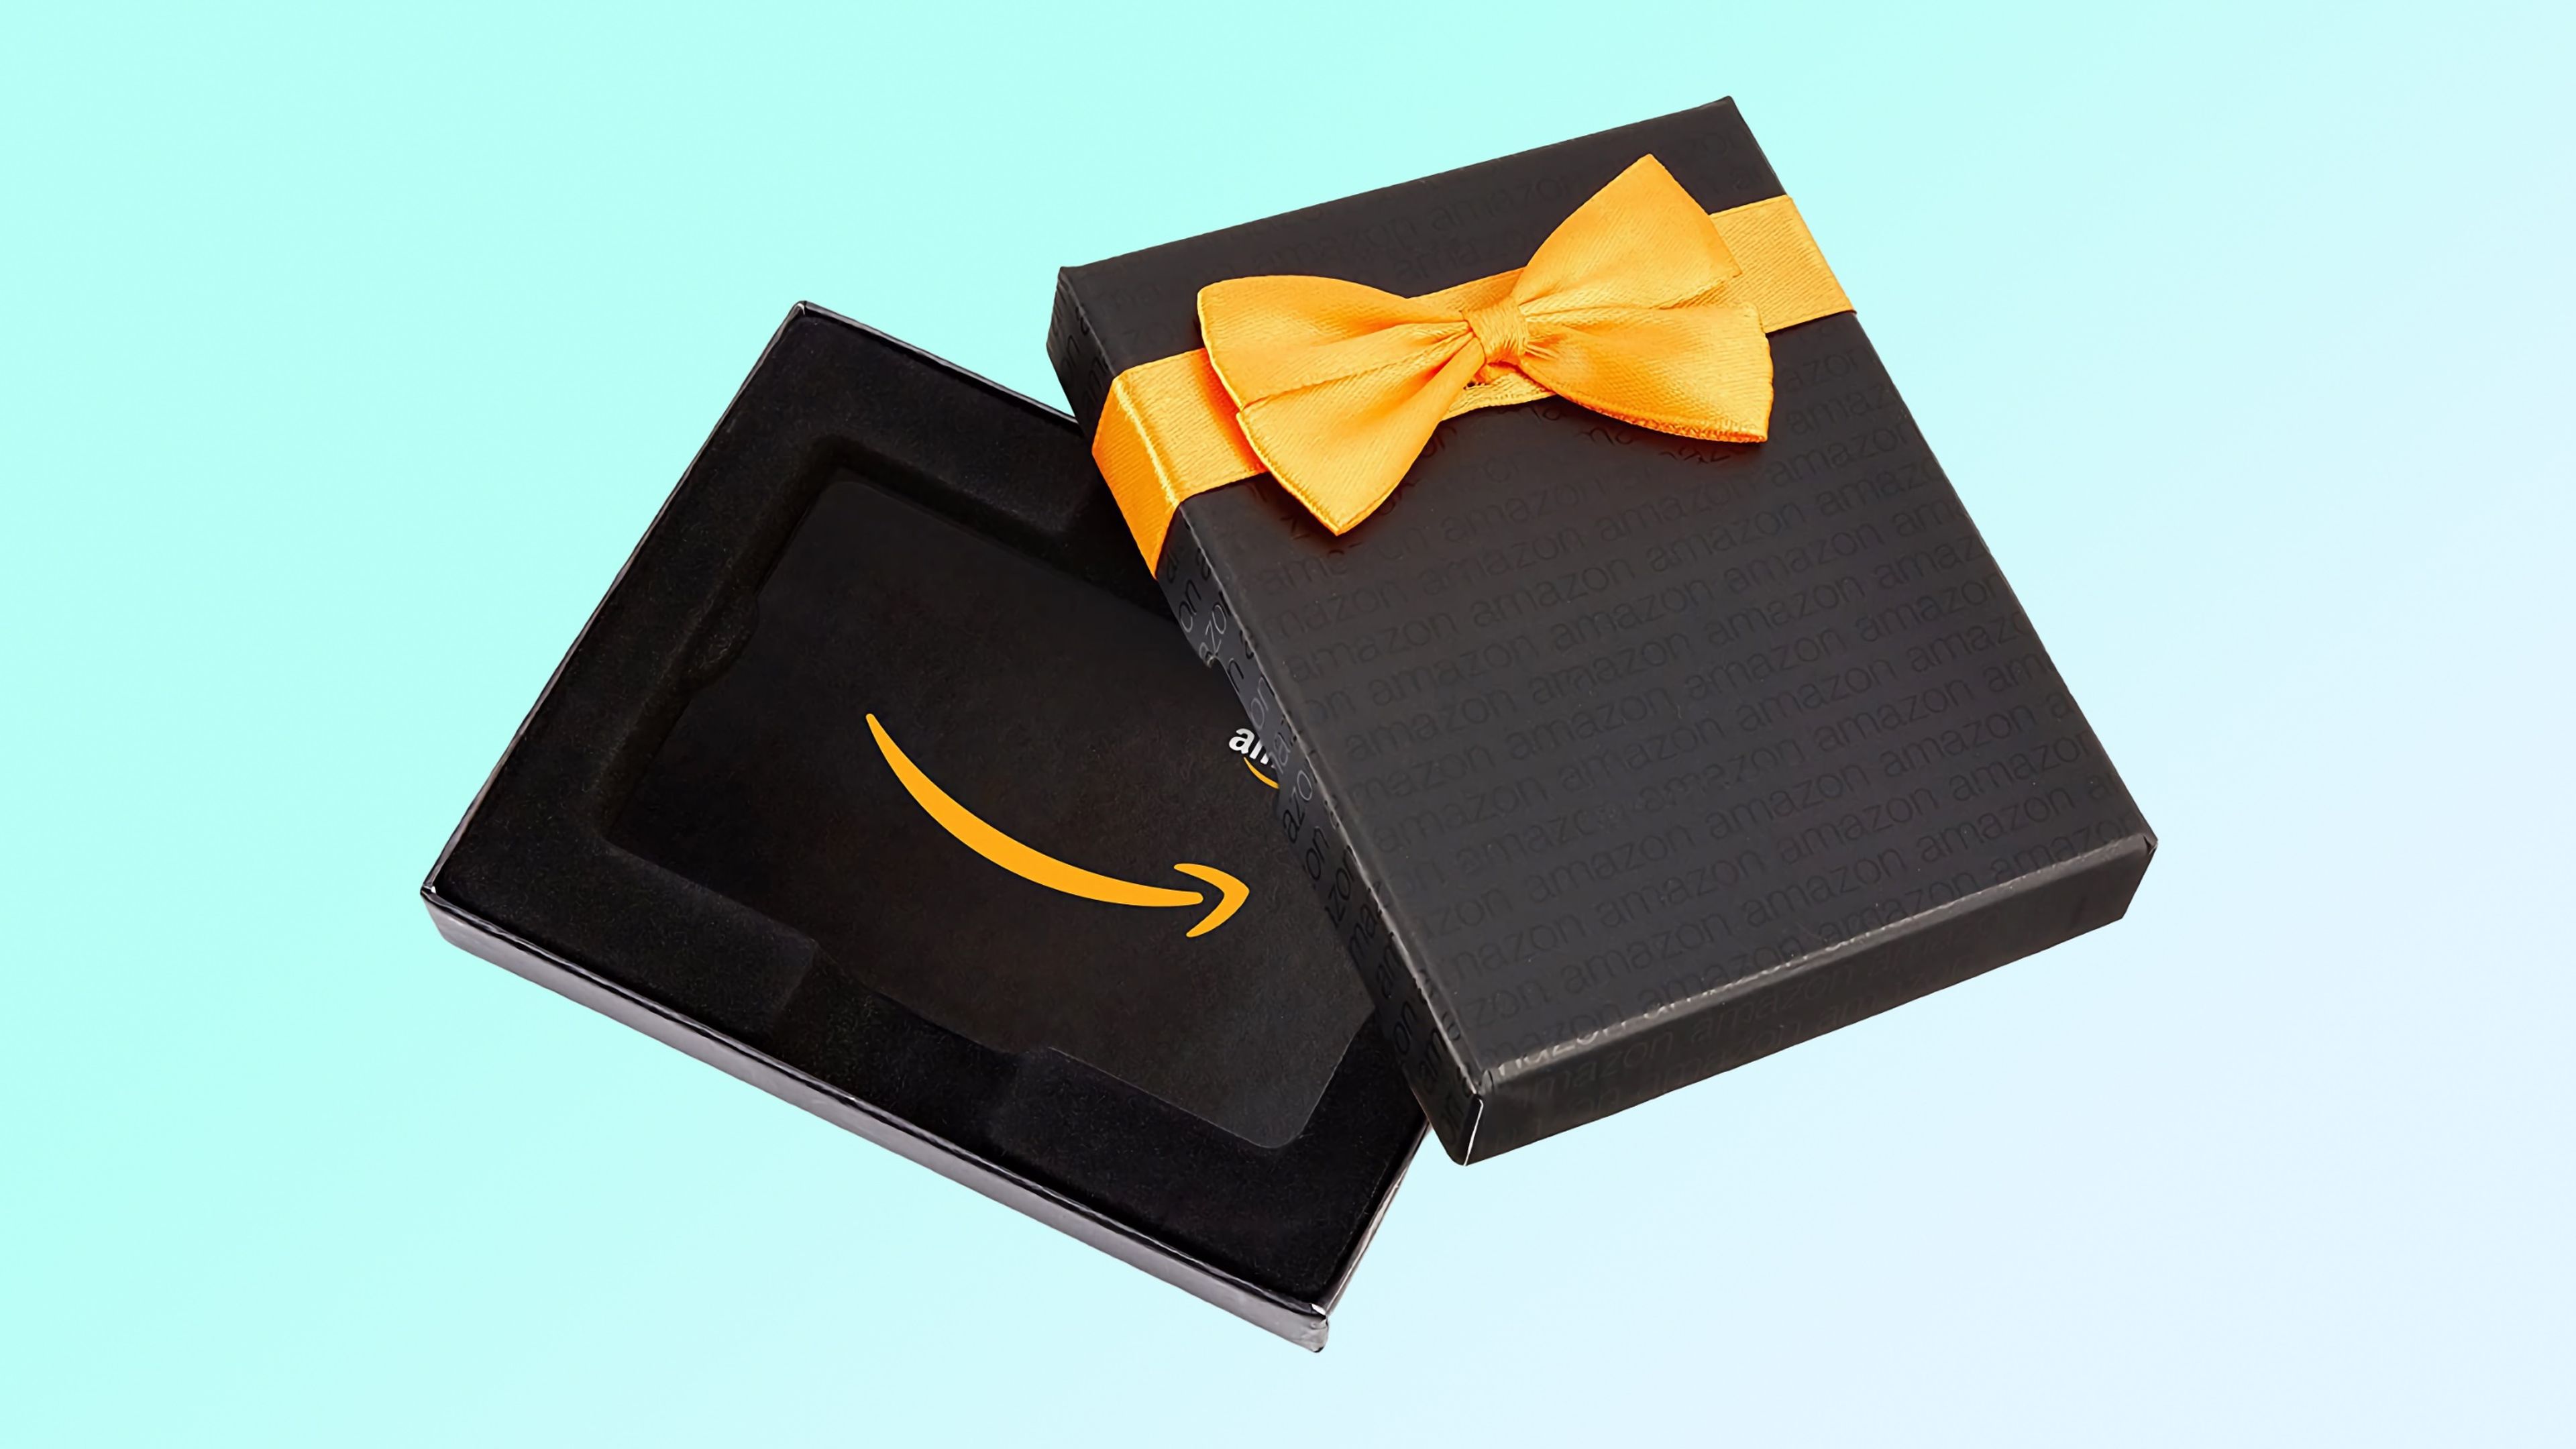 Cheque regalo de Amazon